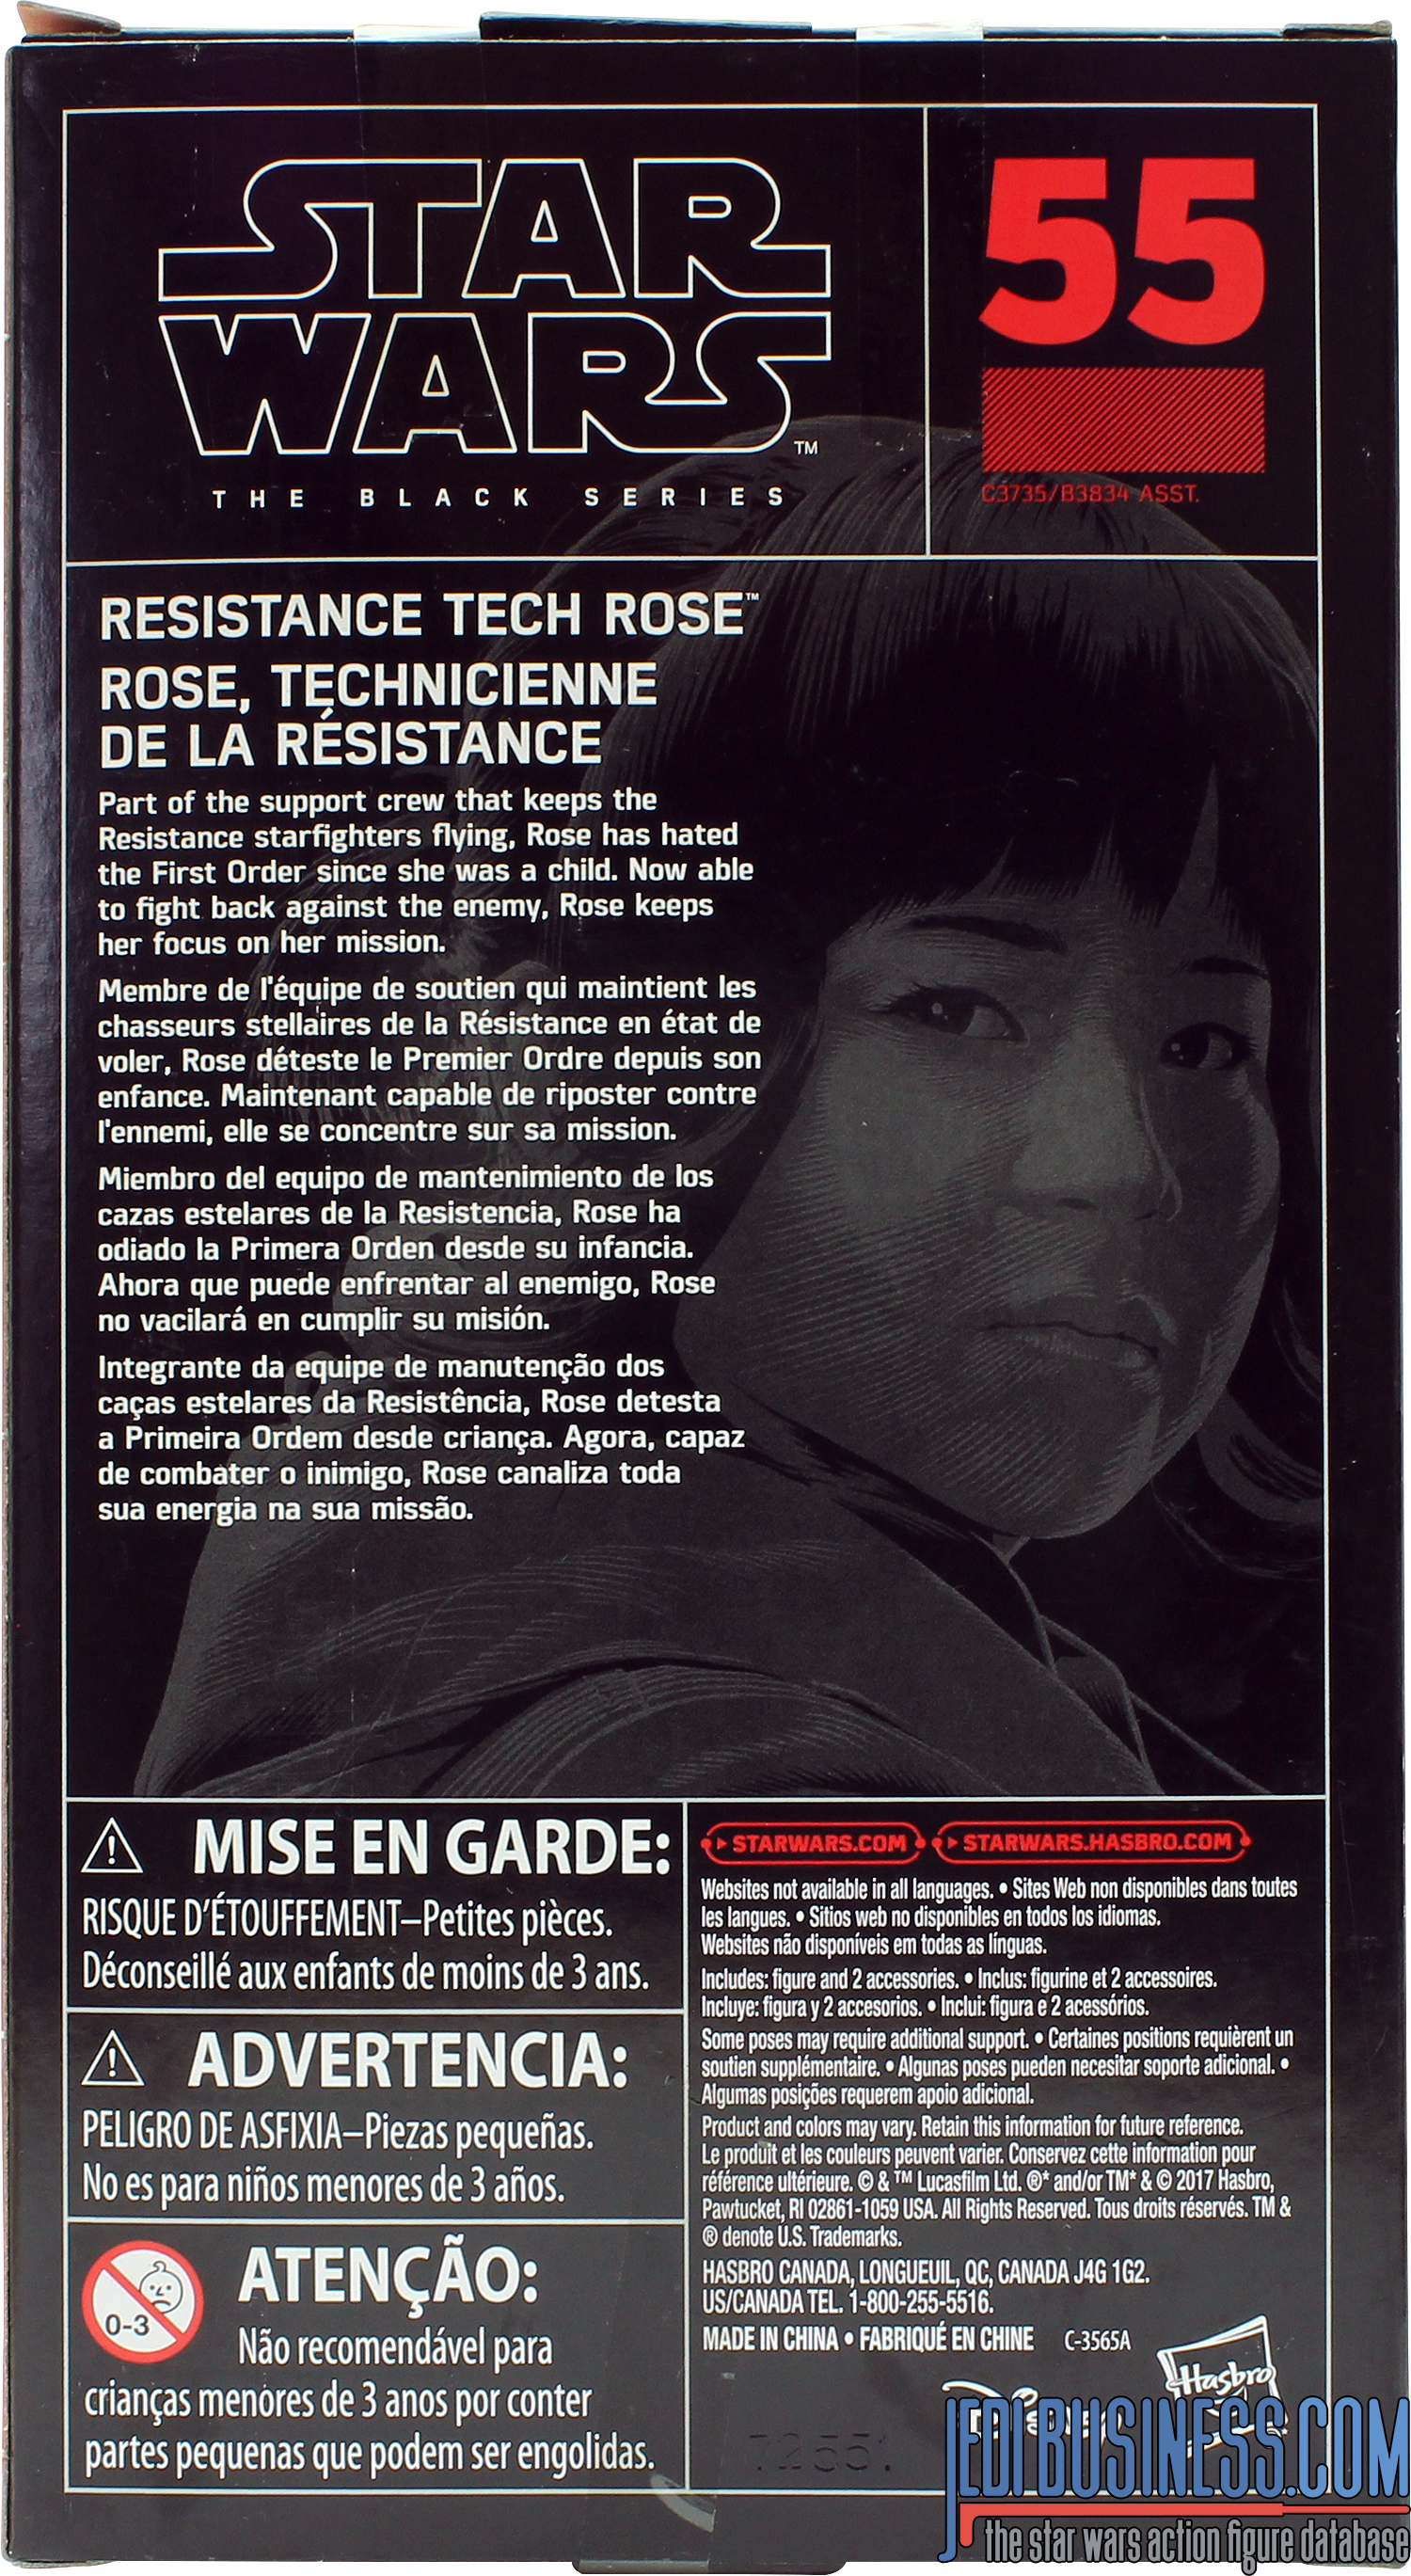 Rose Tico Resistance Tech